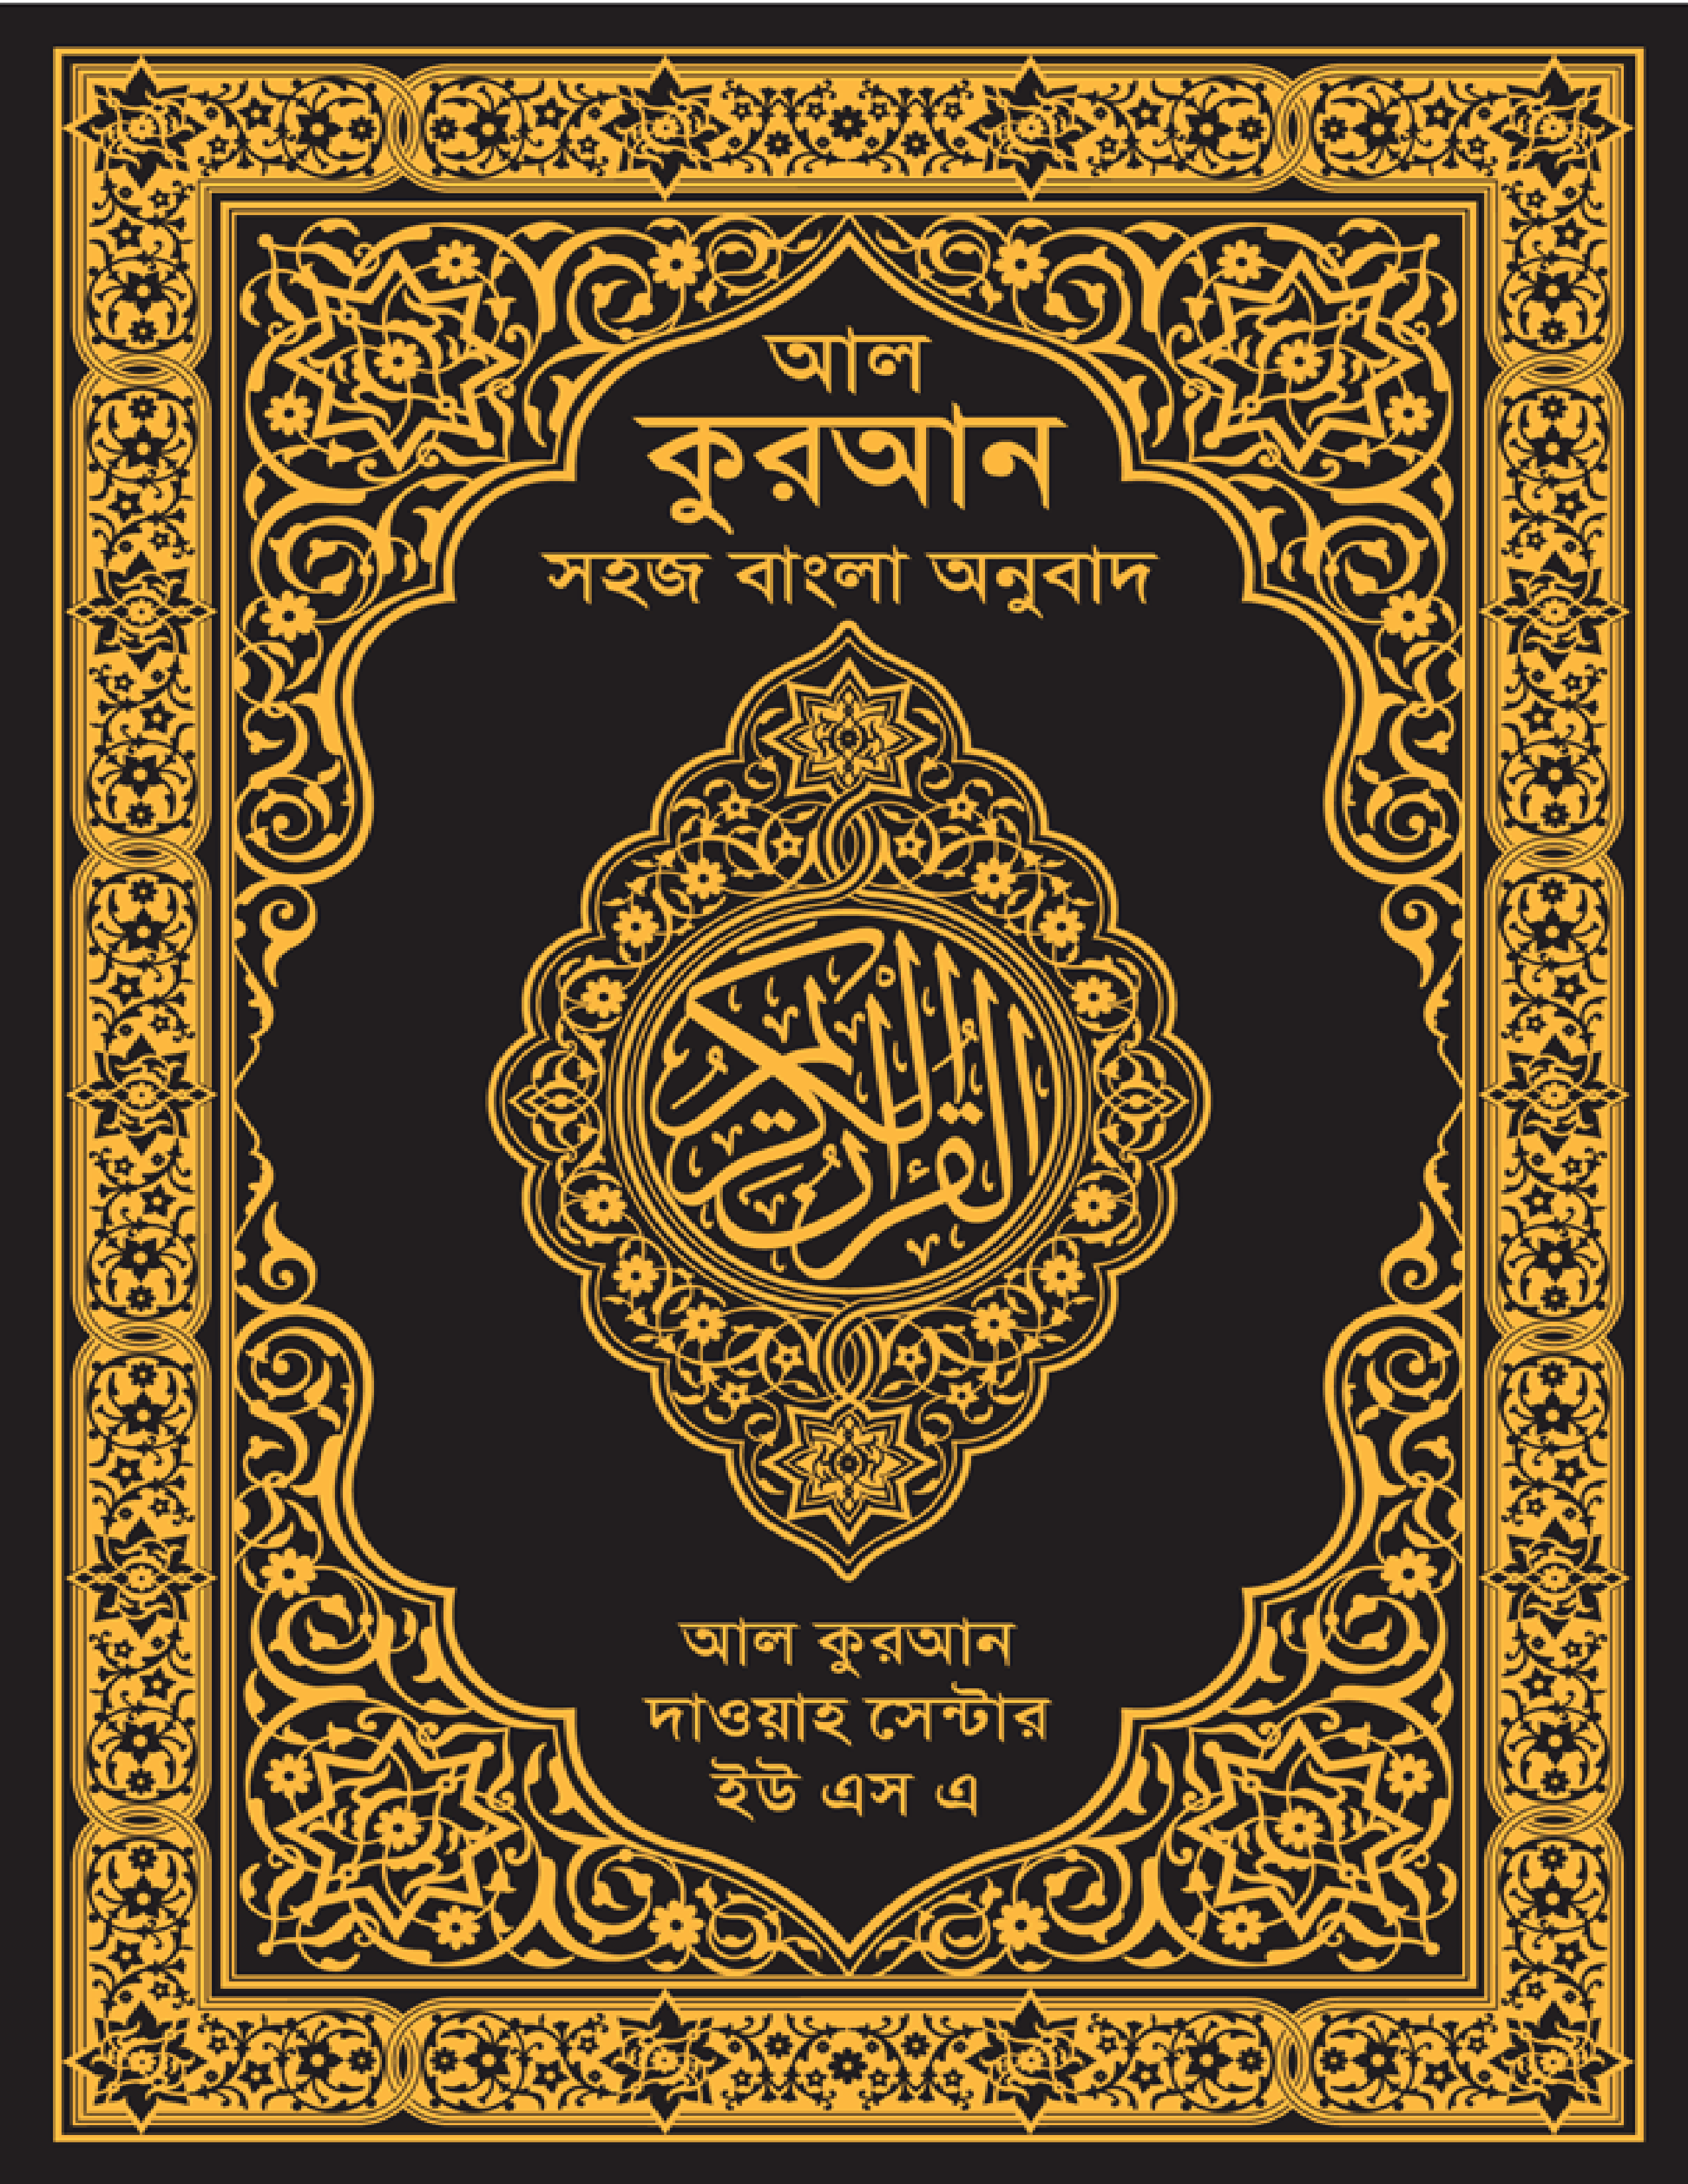 MUNA Academy -Talimul Quran Course